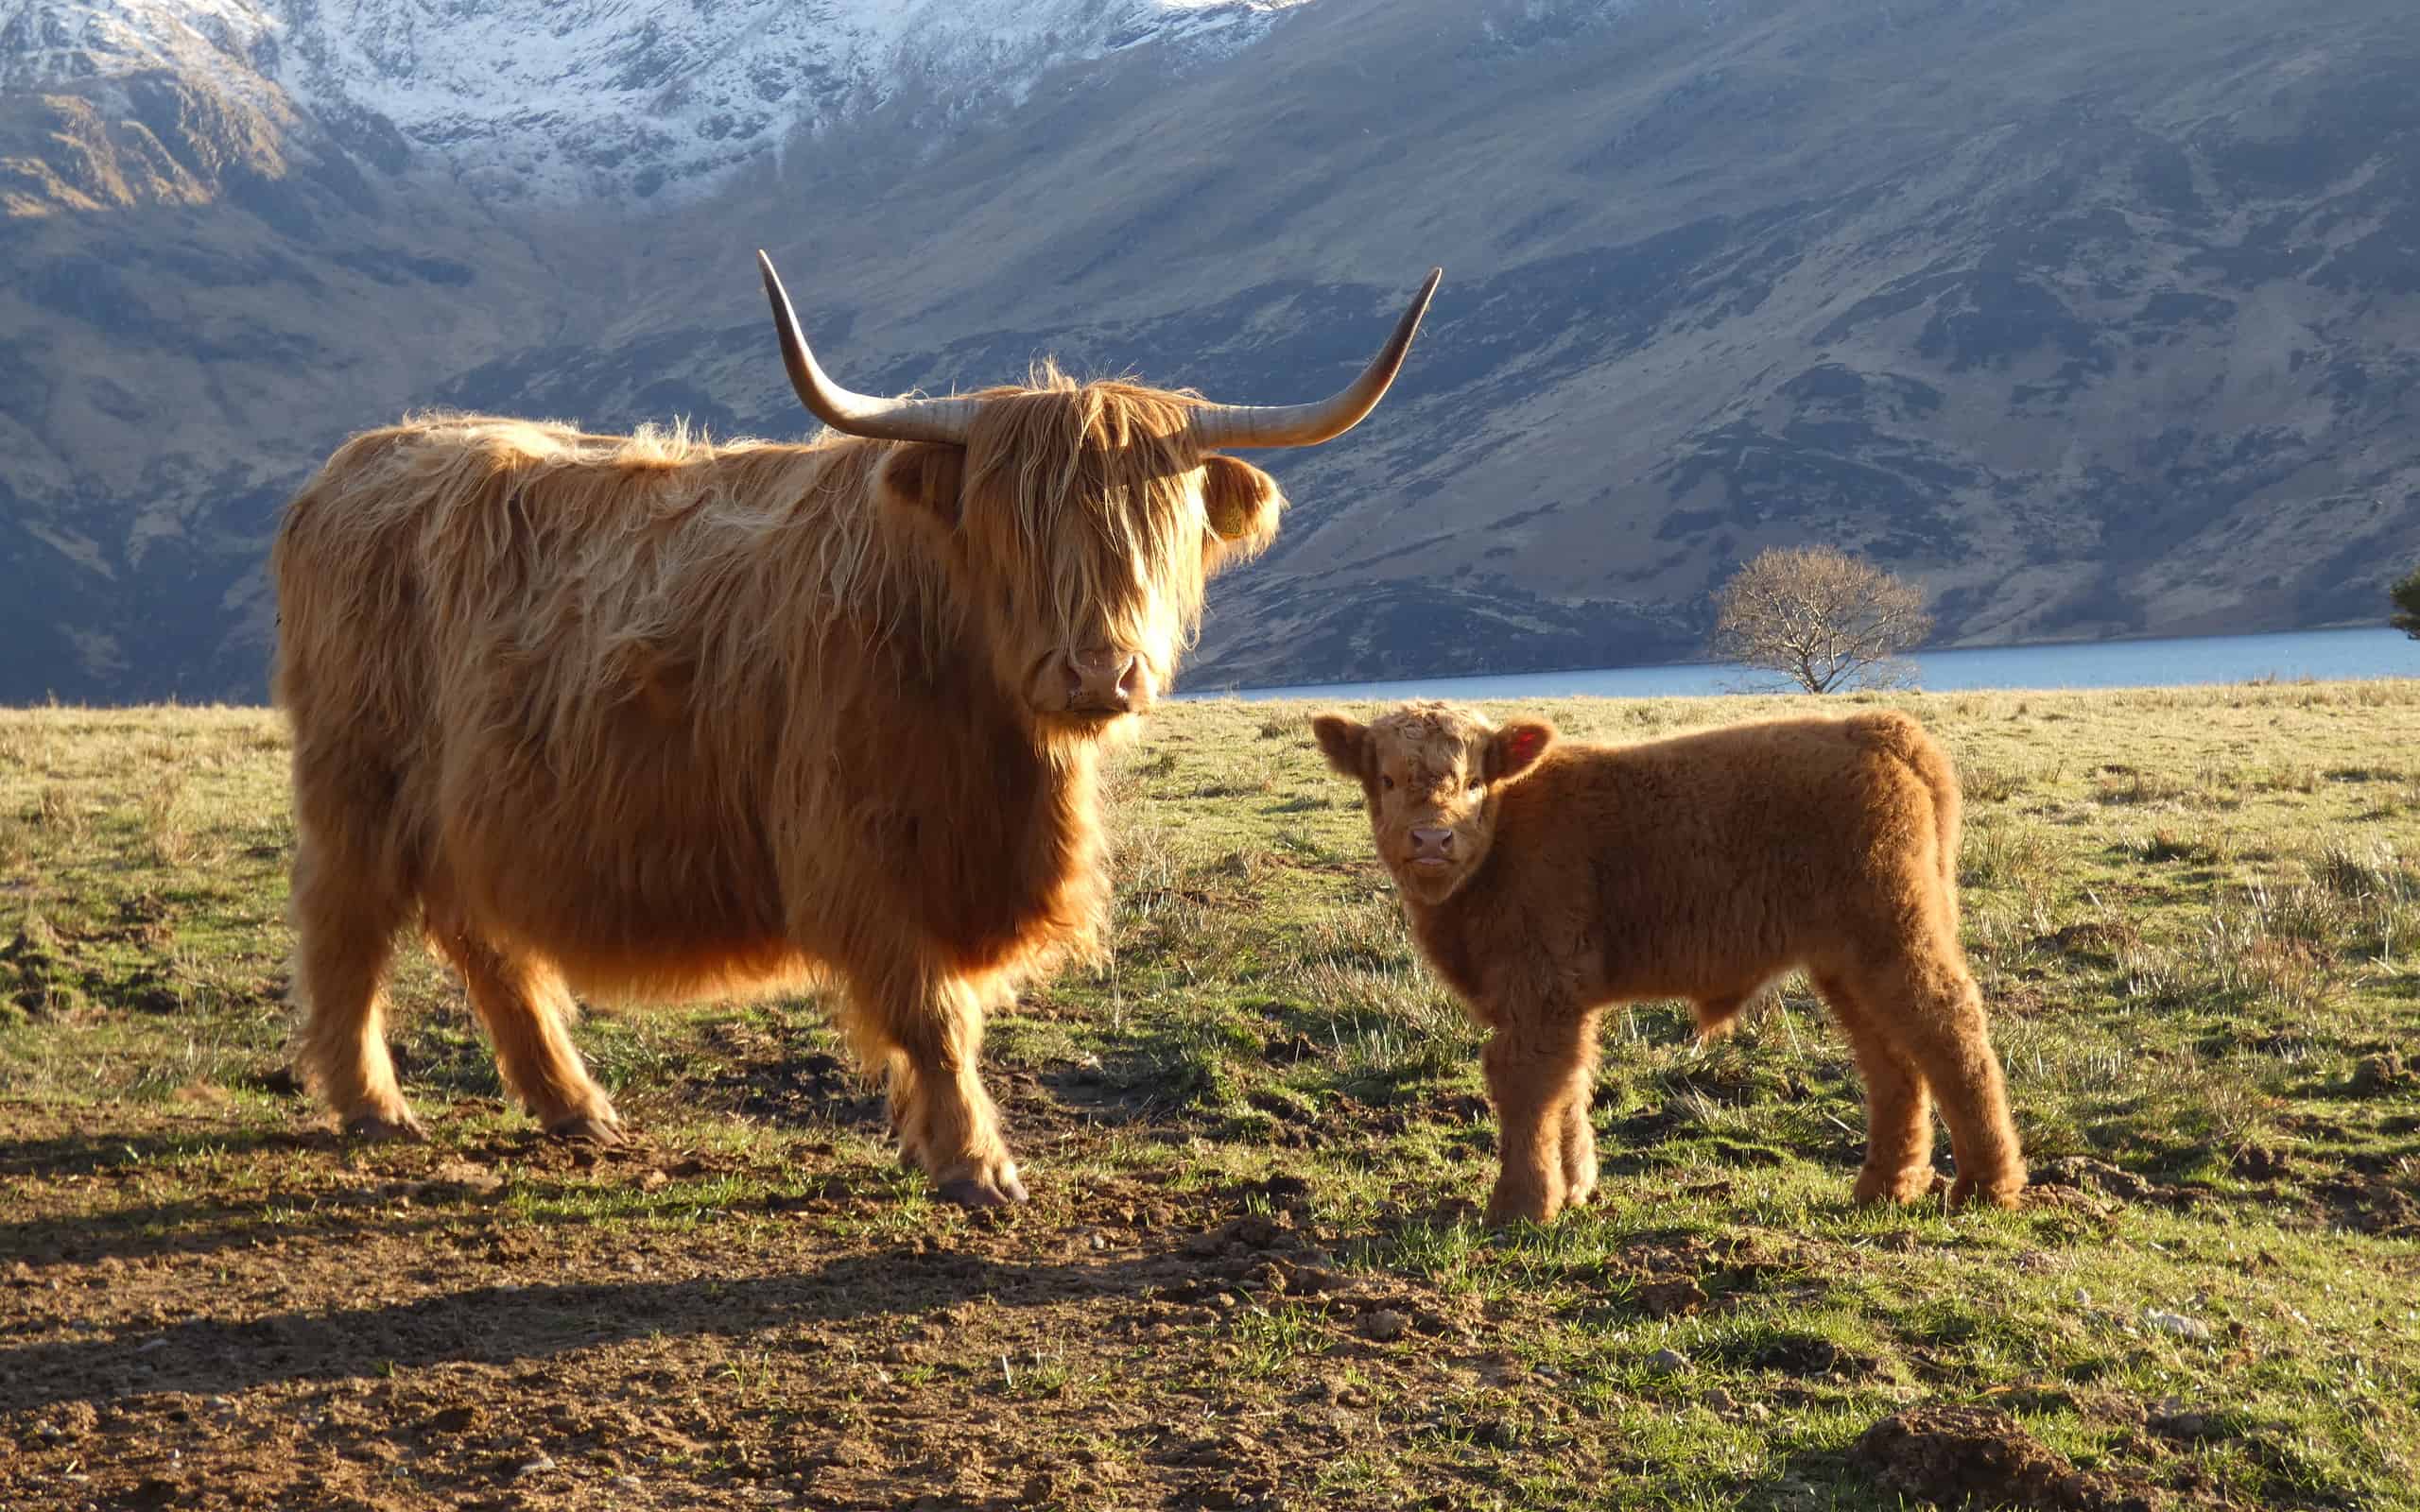 mini highland cattle - Google Search  Mini cows, Miniature cattle, Fluffy  cows